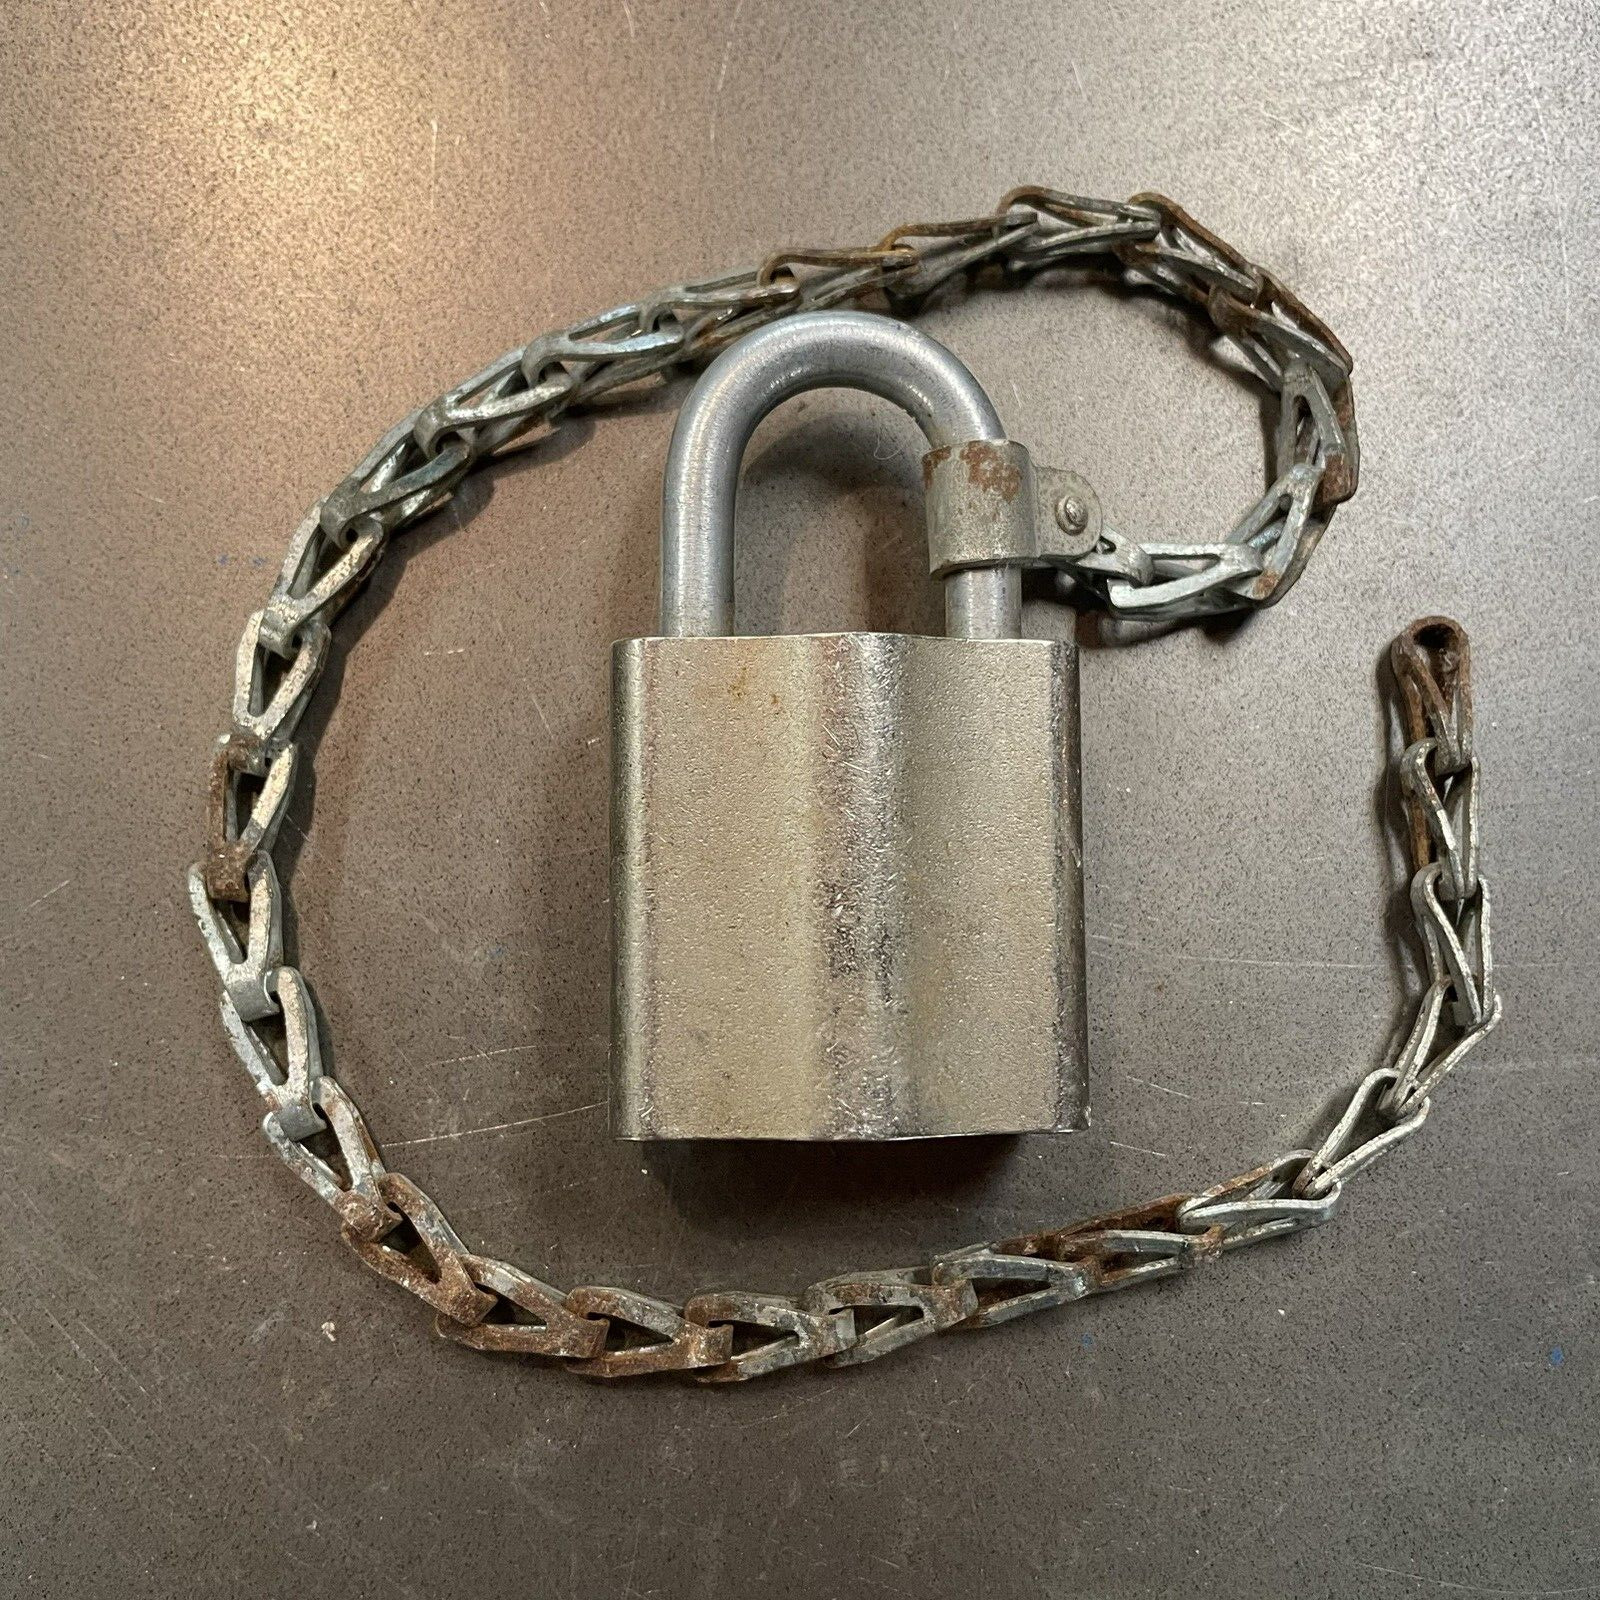 Vintage Sargent & Greenleaf High Security Padlock Lock   No Key